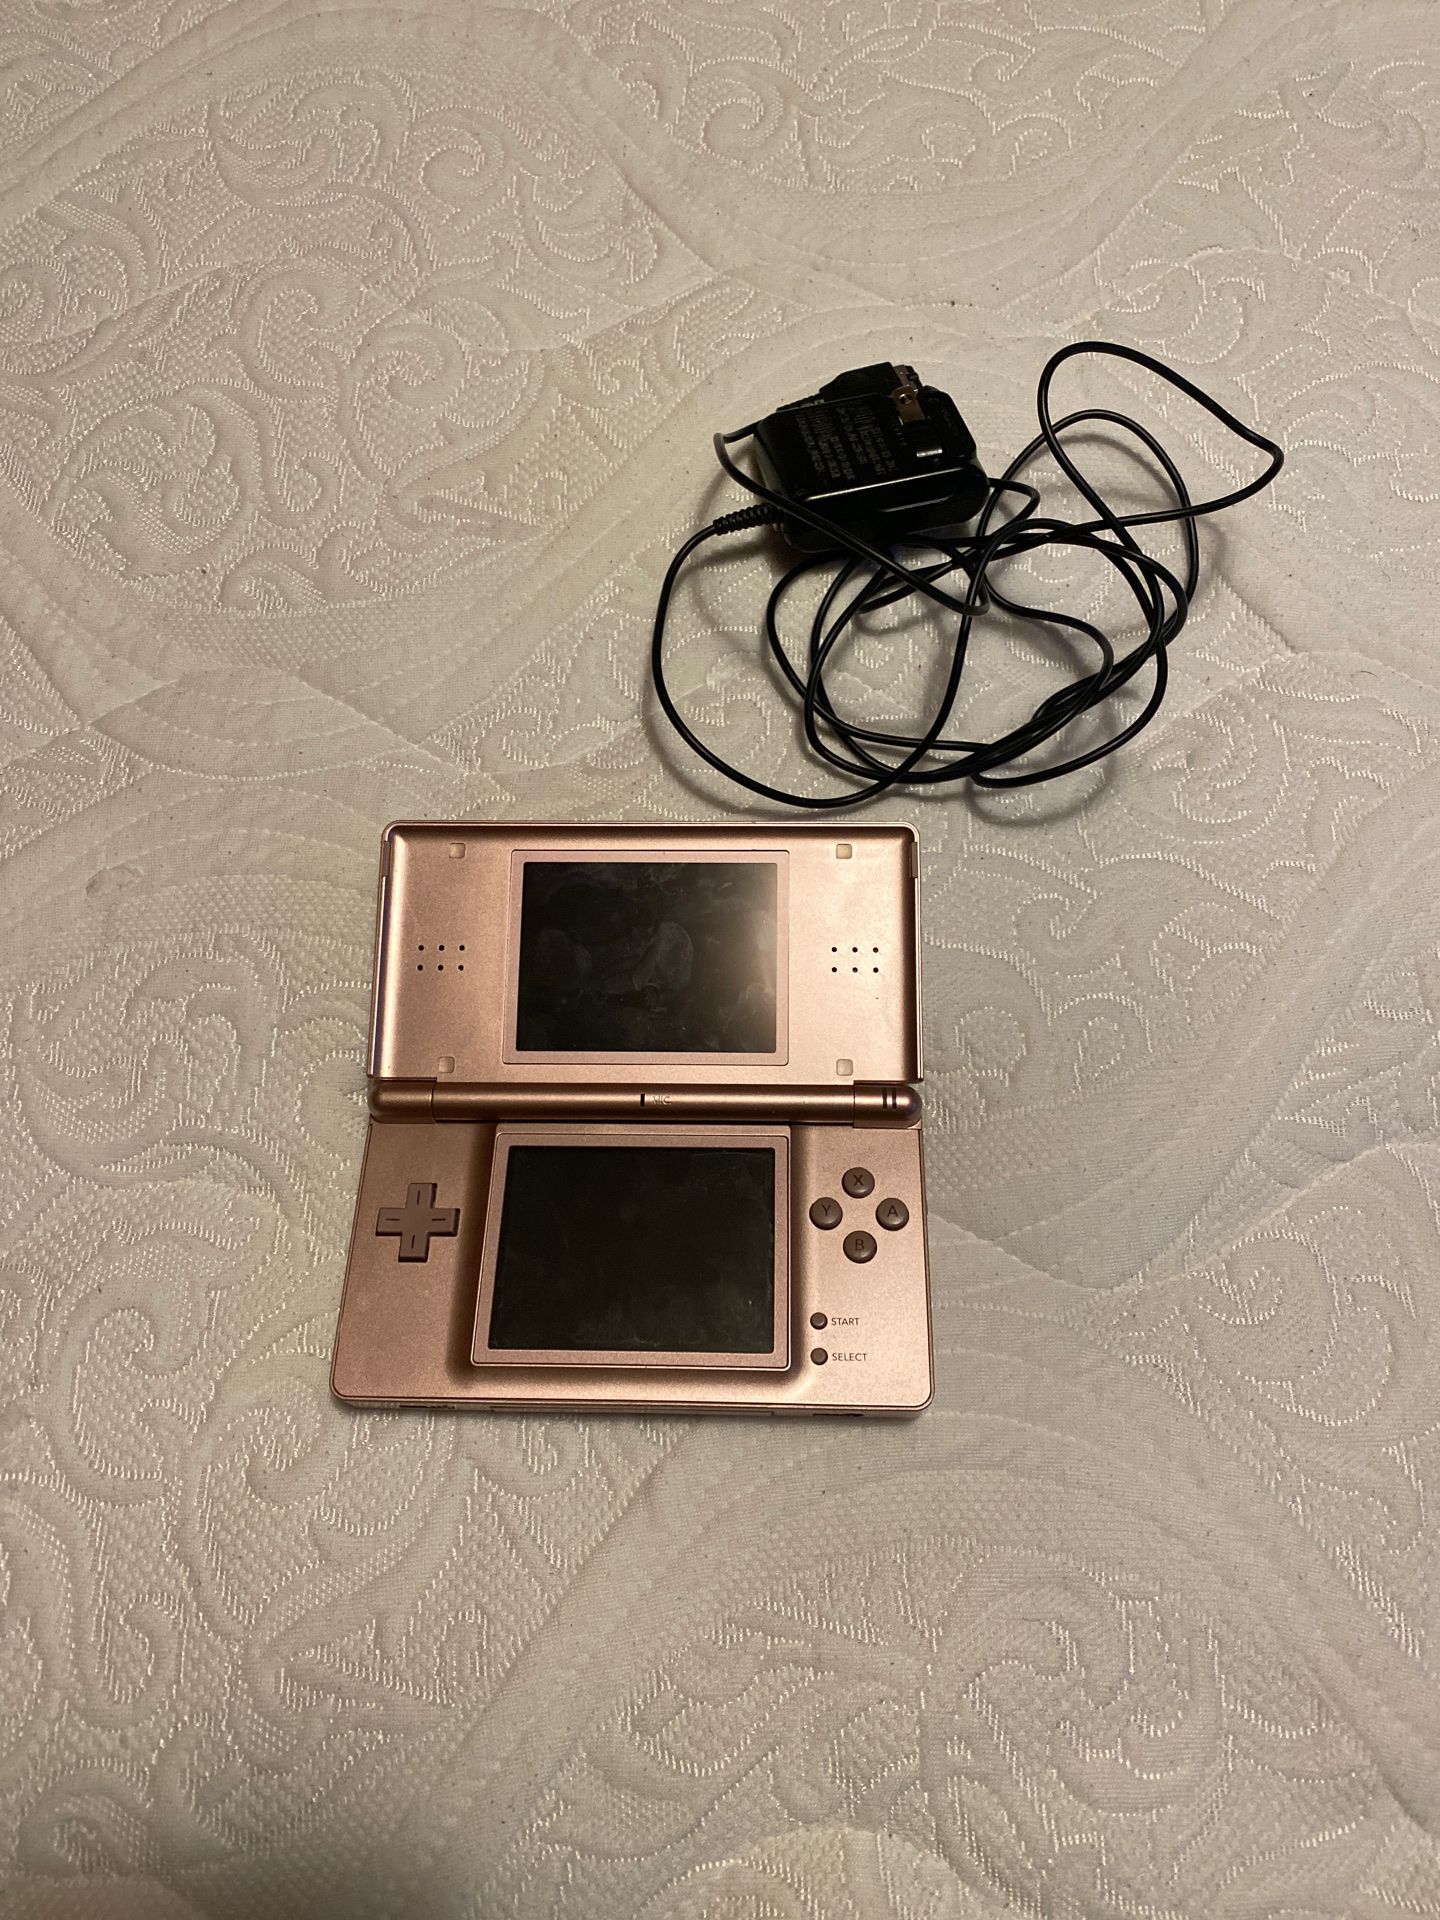 Pink Nintendo DS lite